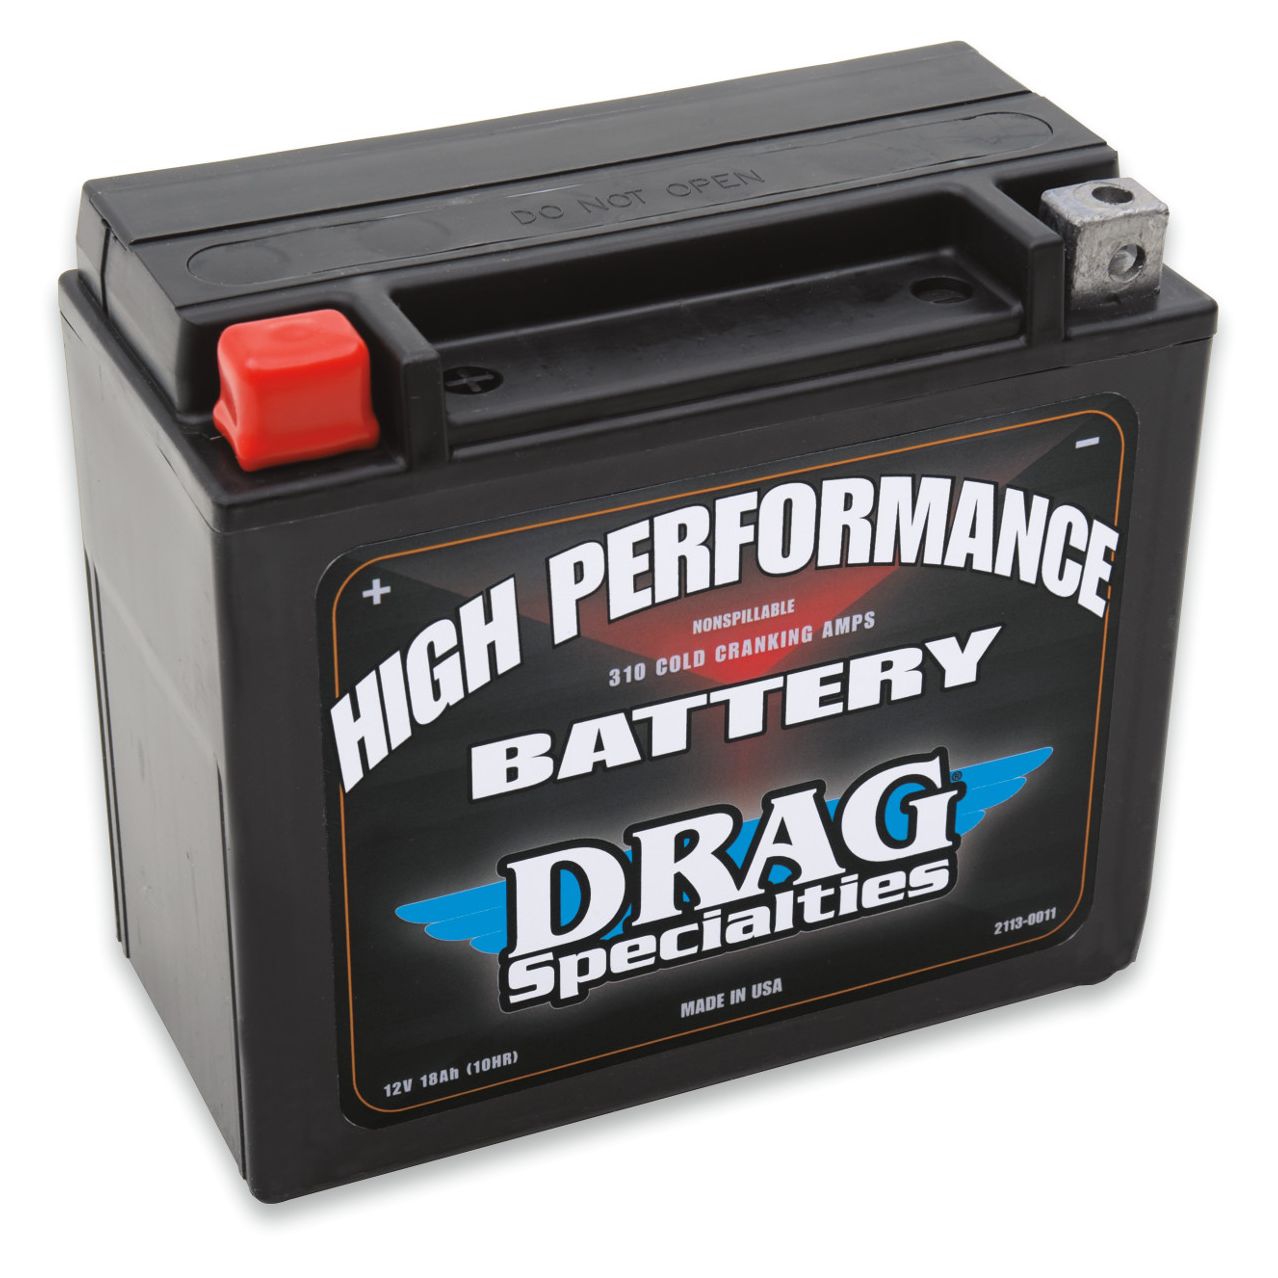 Batterie Drag Specialties HAUTE PERFORMANCE